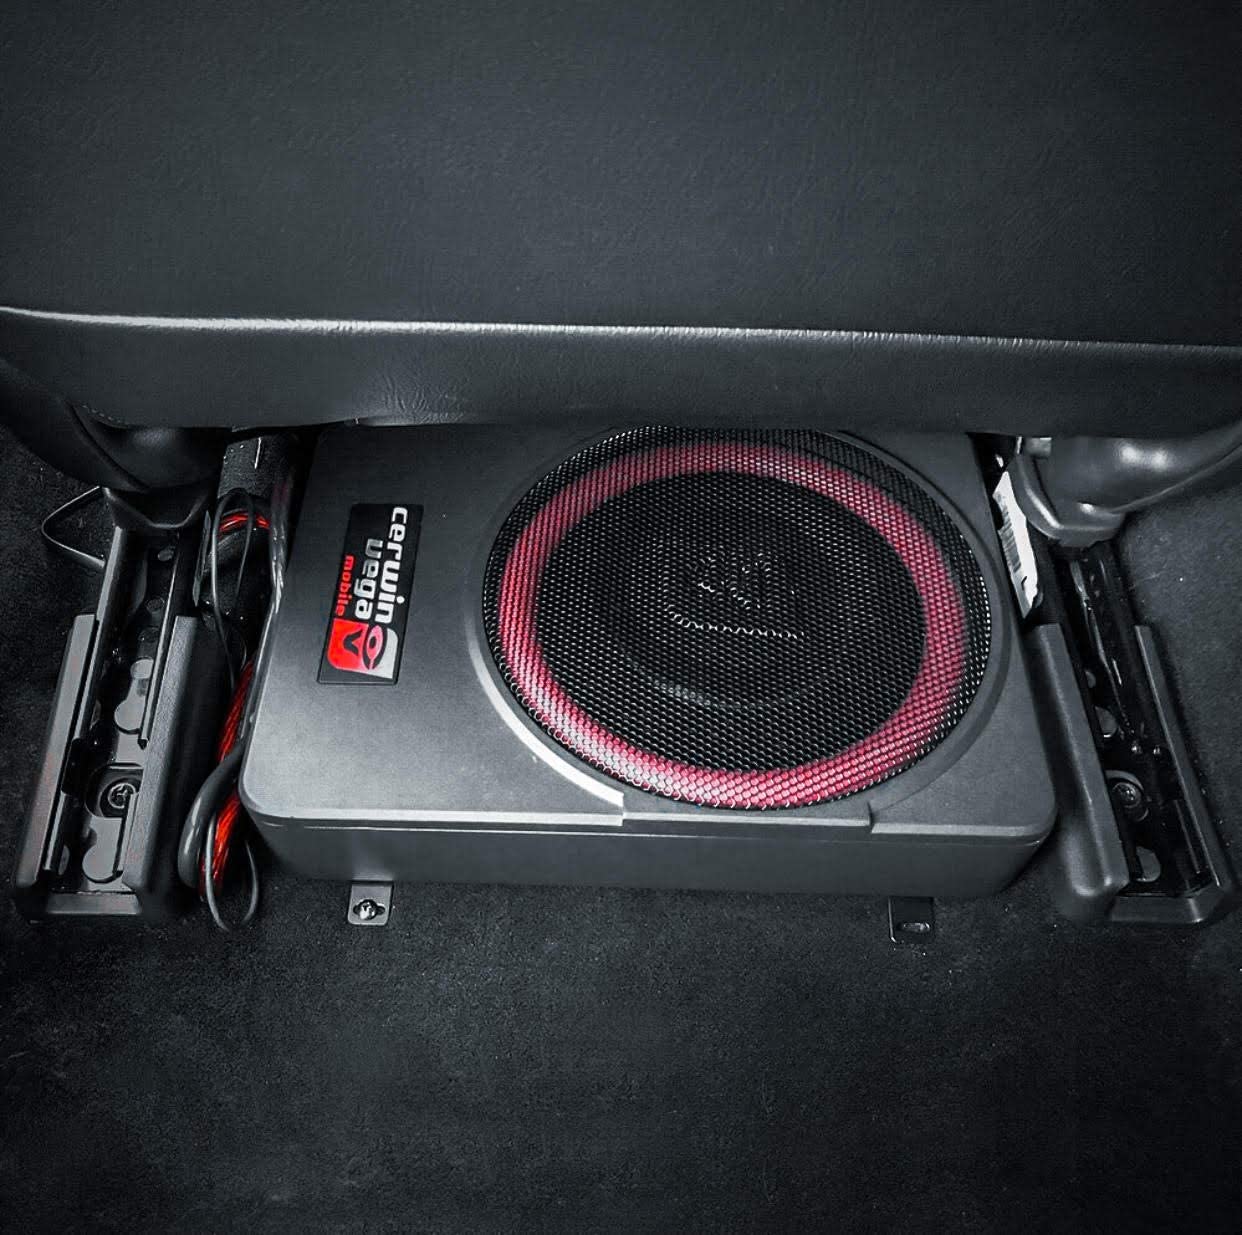 Cerwin Vega Mobile VPAS10 <br/>Under Seat  550W Max 10" Powered 2Ohm Car Subwoofer amplifier installation kit